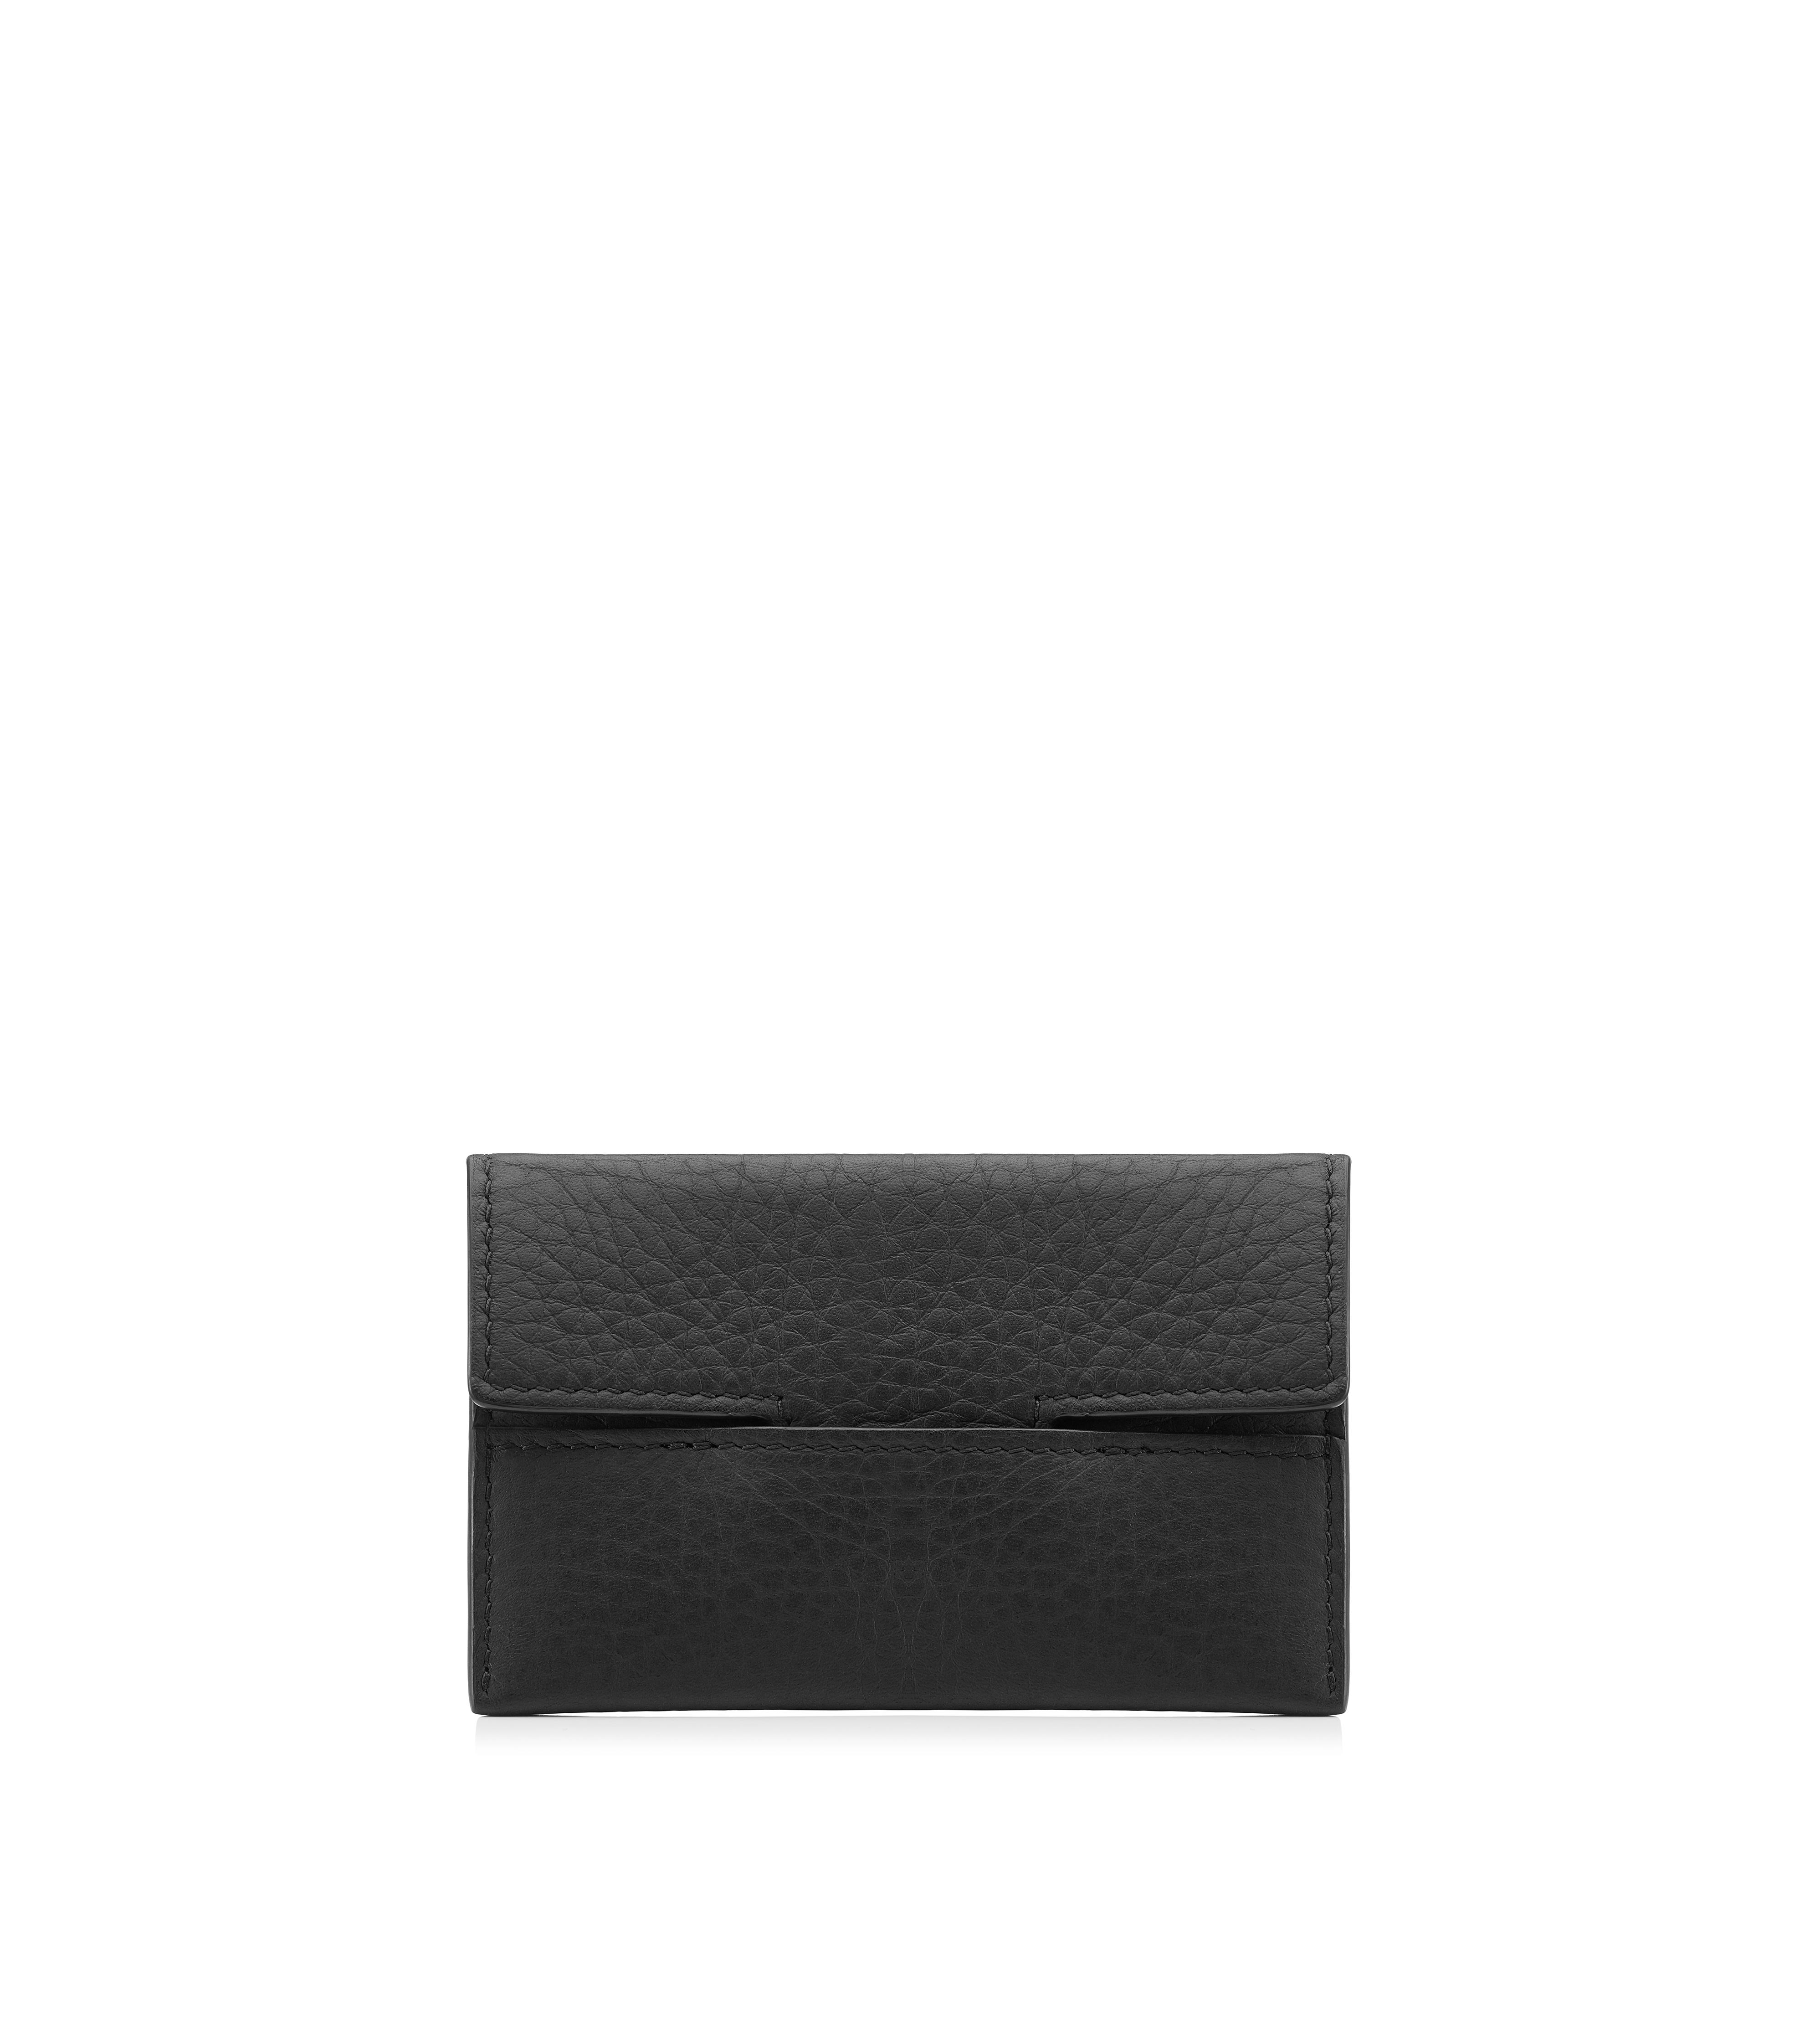 Small Leather Goods - Wallets for Men by TOM FORD - Designer Men's ...